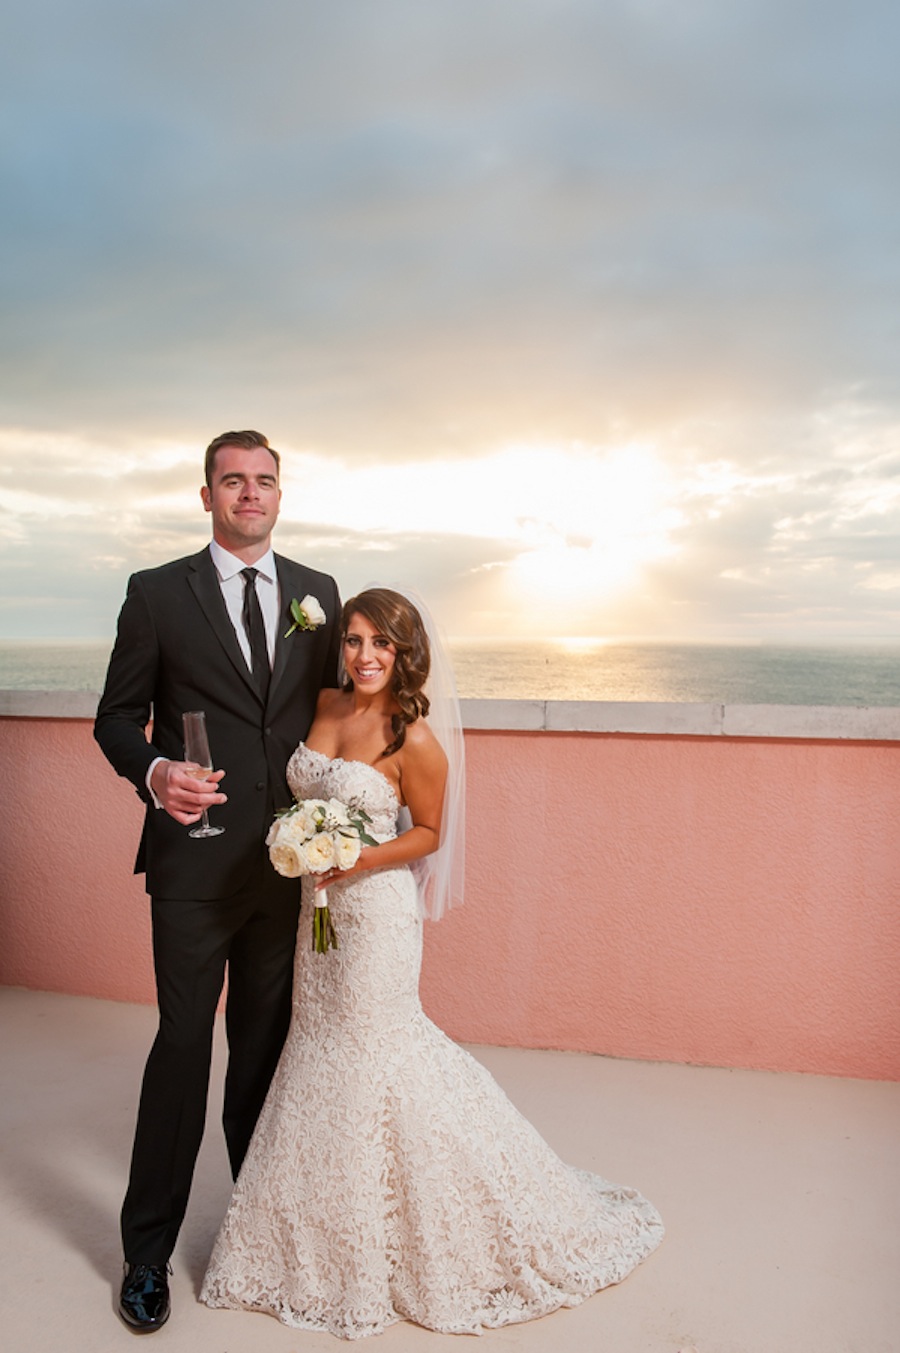 Clearwater Beach Rooftop Sunset Wedding Portrait | Sarah & Ben Photography